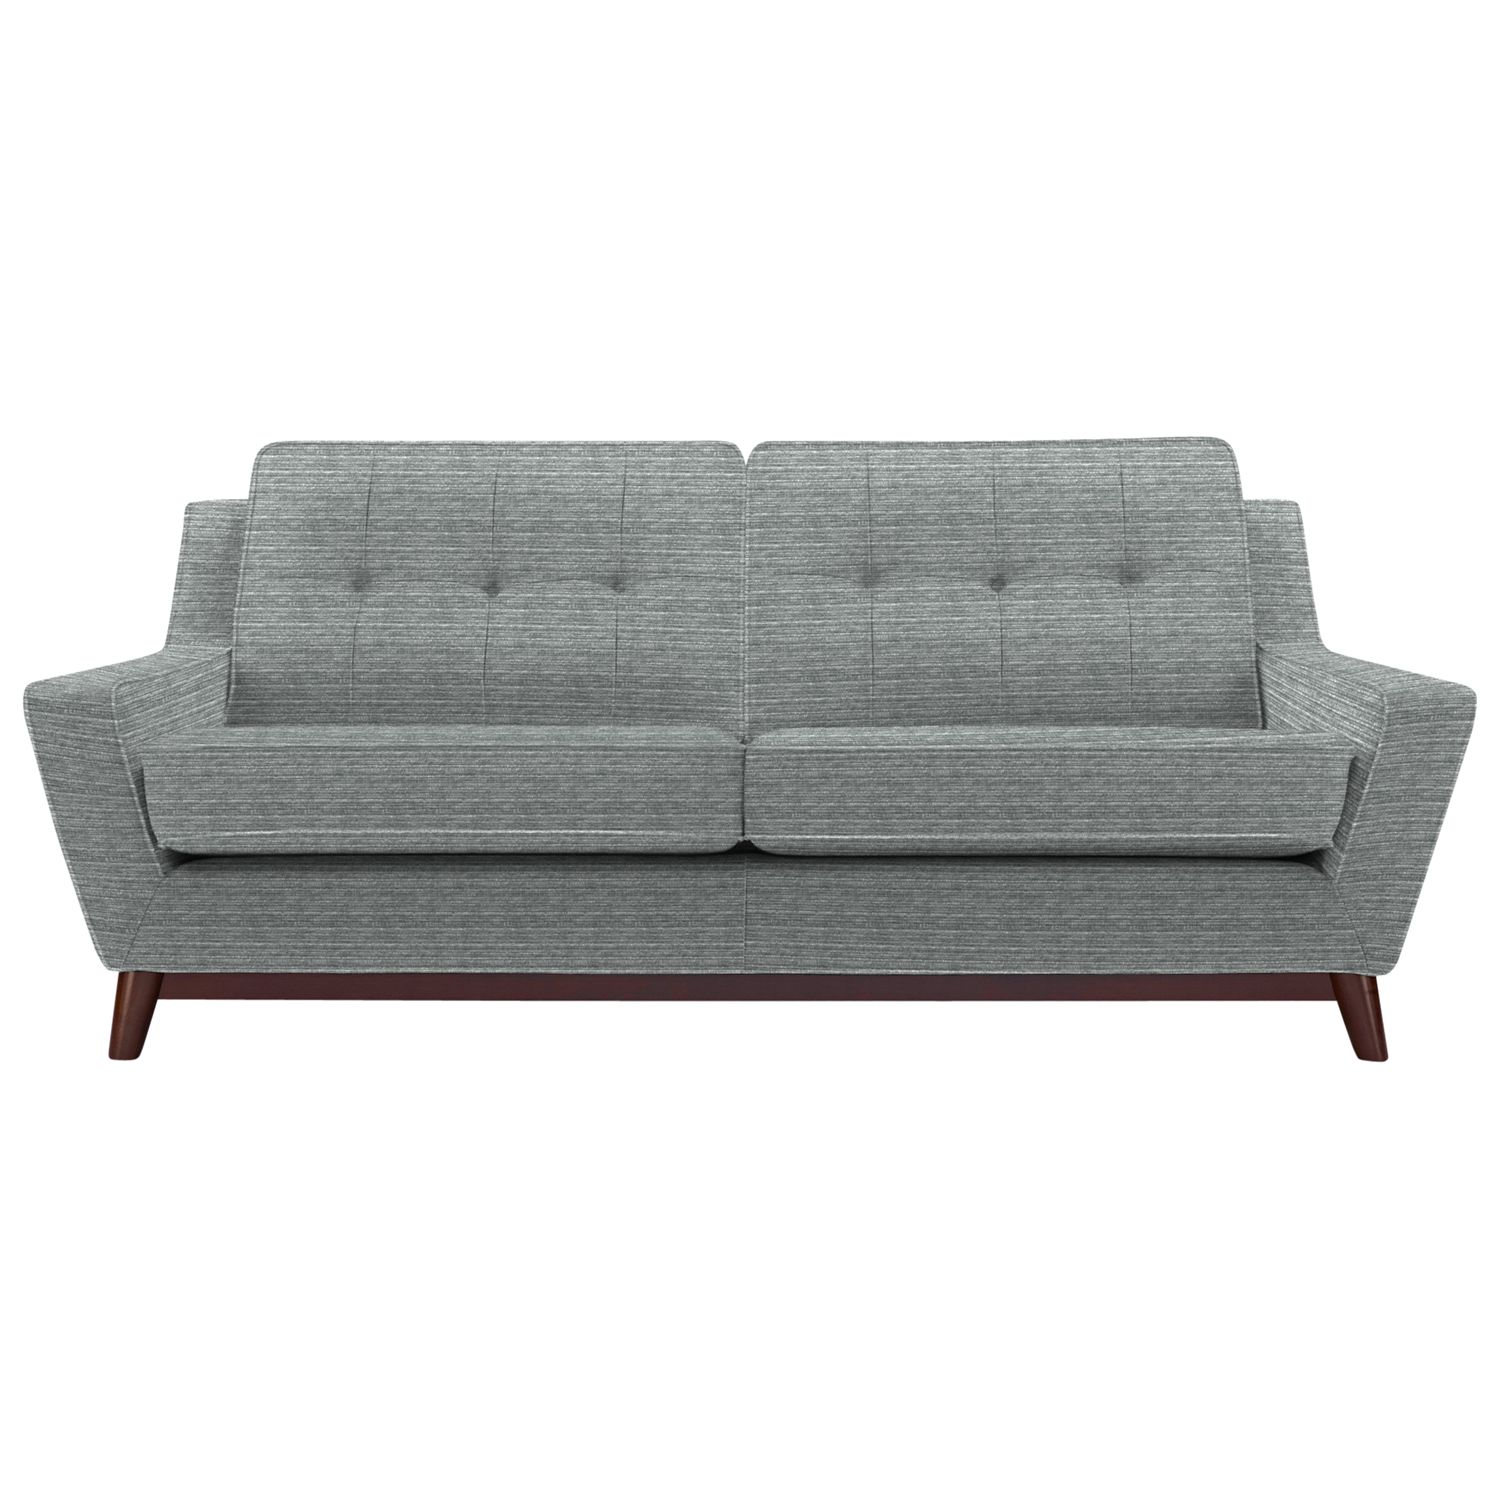 G Plan Vintage The Fifty Three Large Sofa, Streak Grey, width 199cm